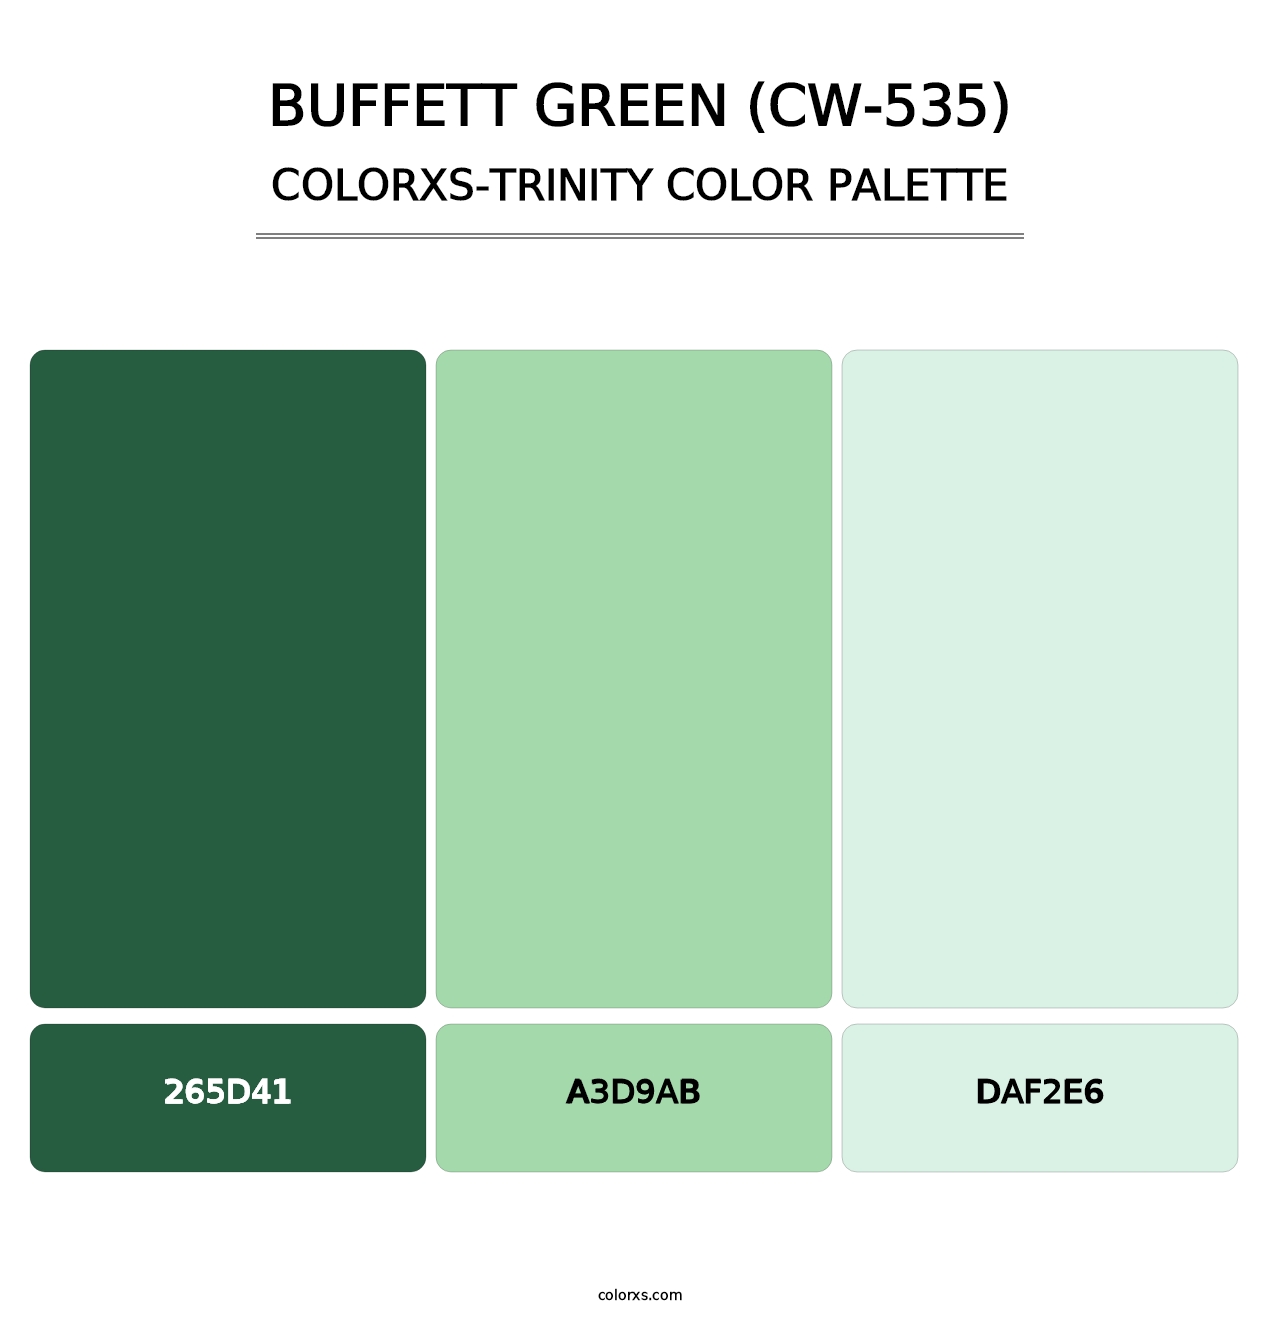 Buffett Green (CW-535) - Colorxs Trinity Palette